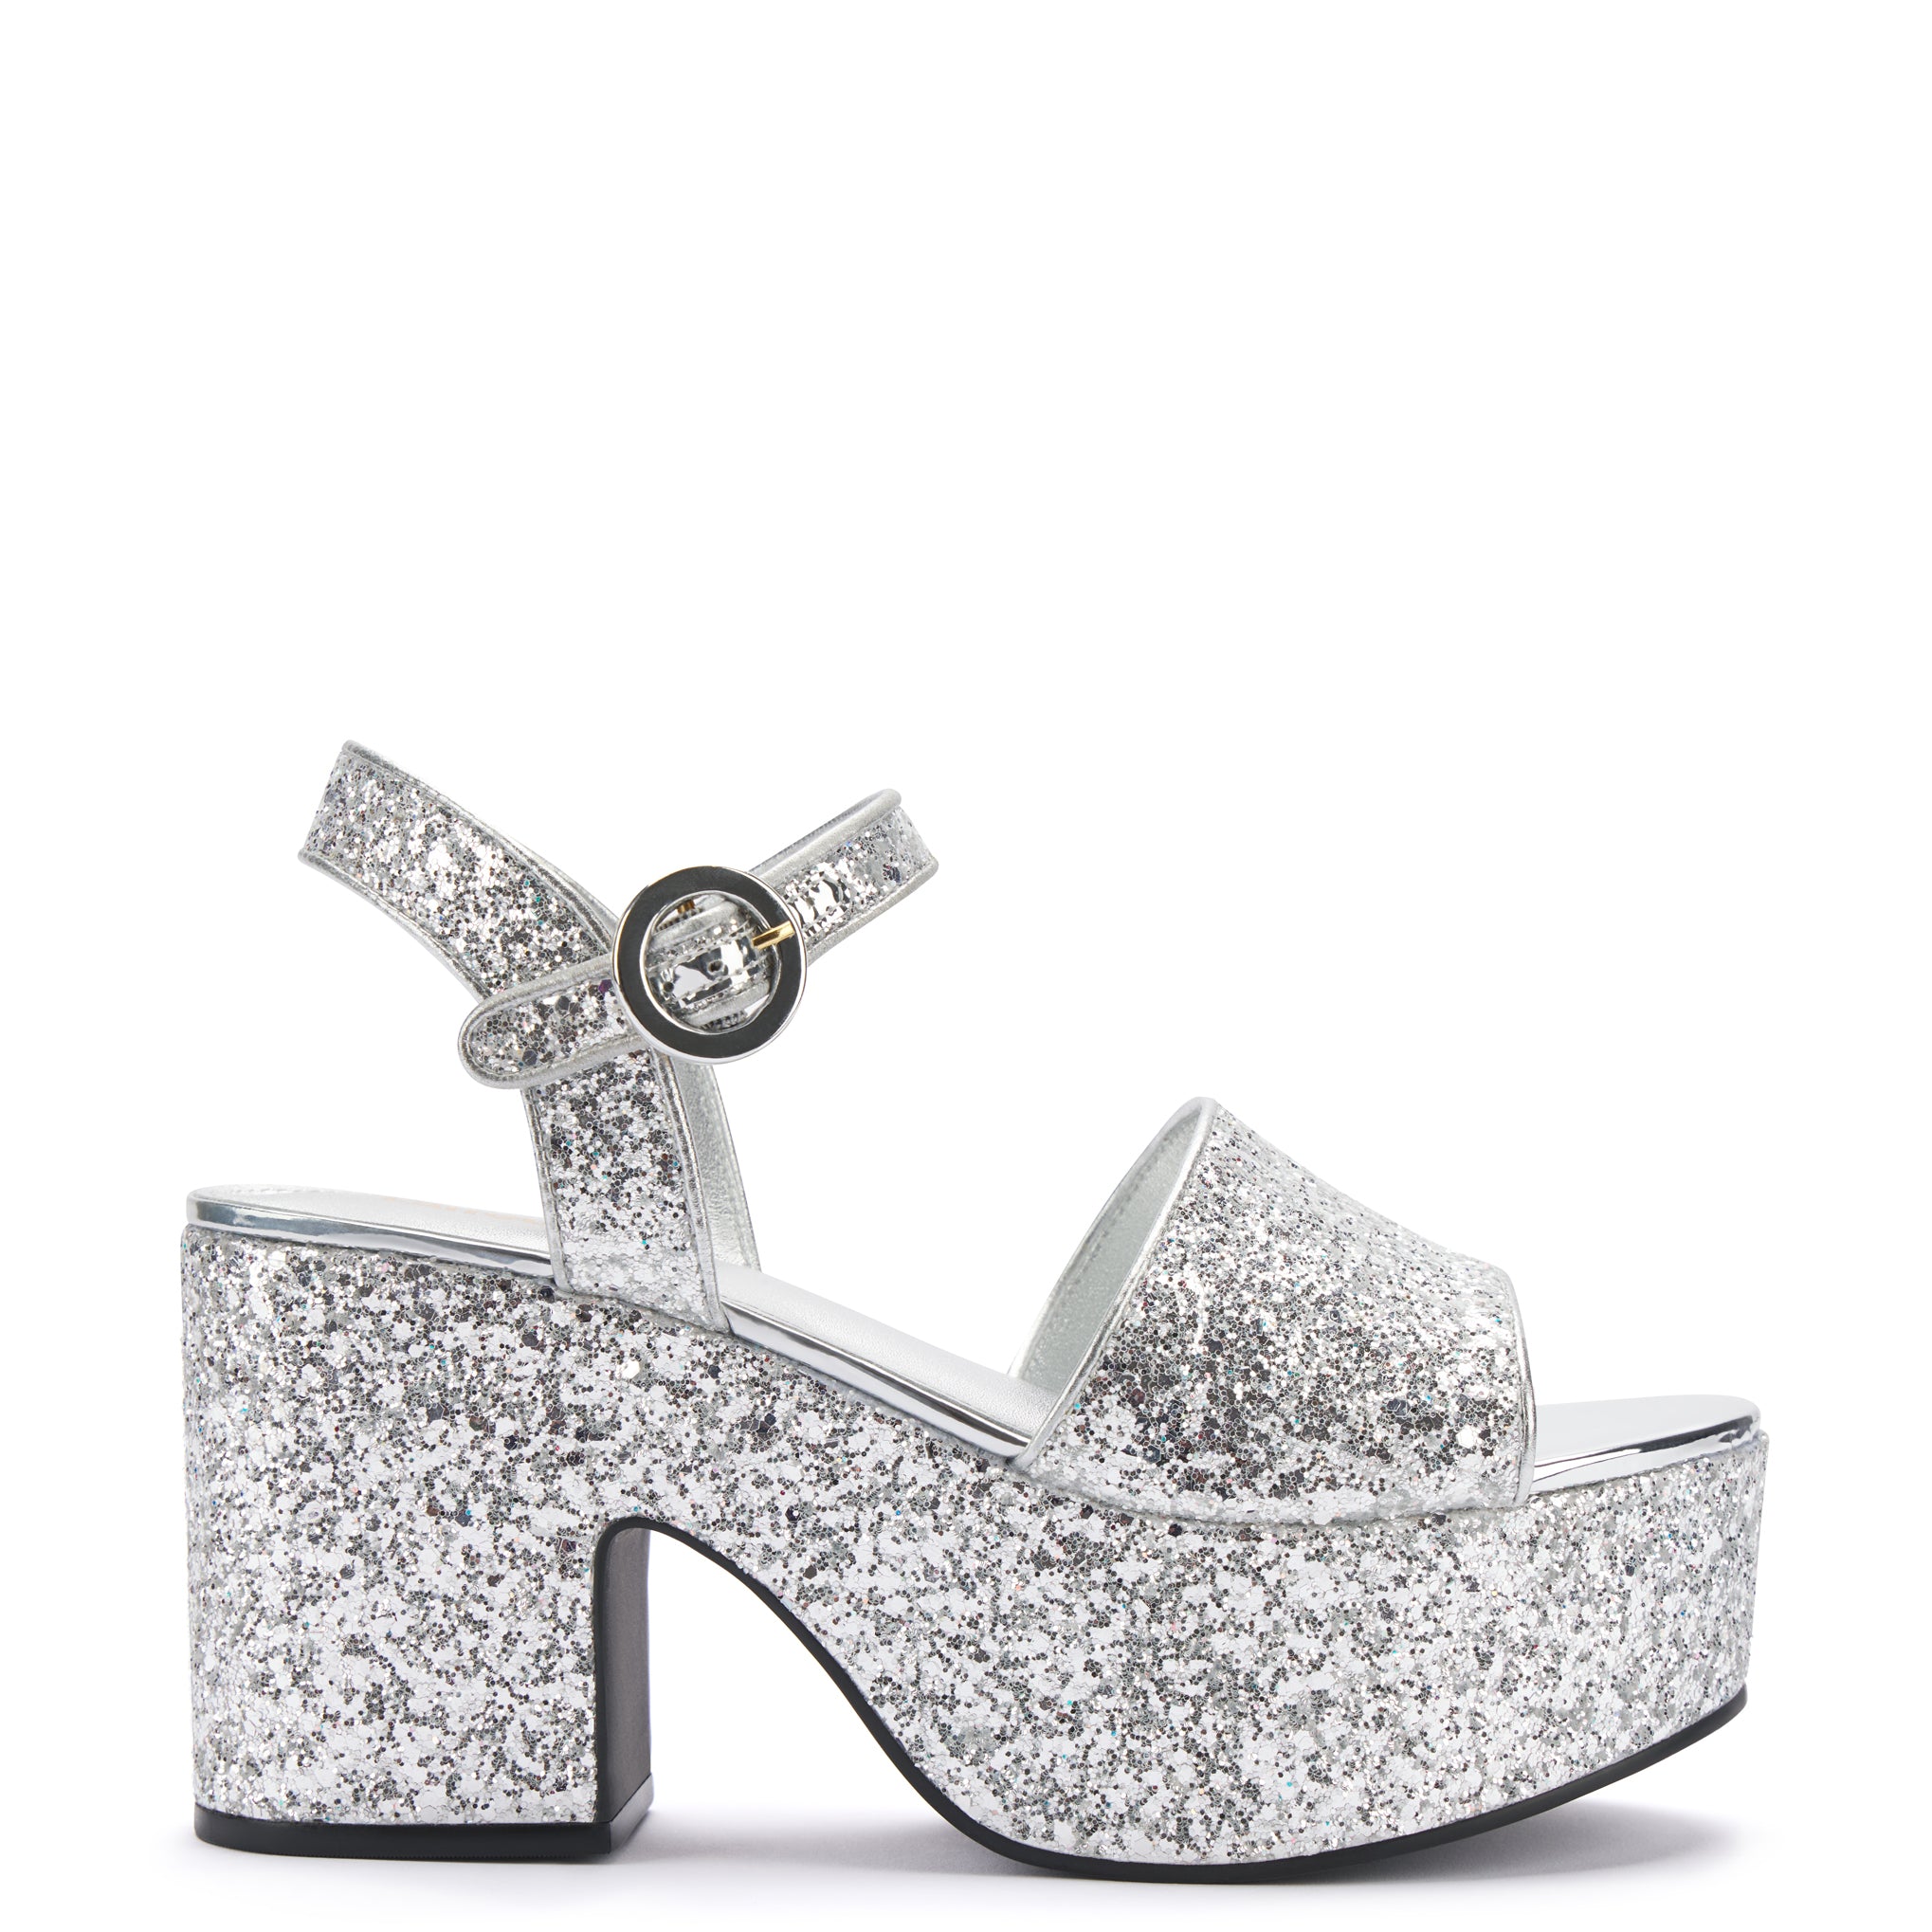 Shop Silver Heels: Sandals, Booties, Platforms, Mules - Fashionista